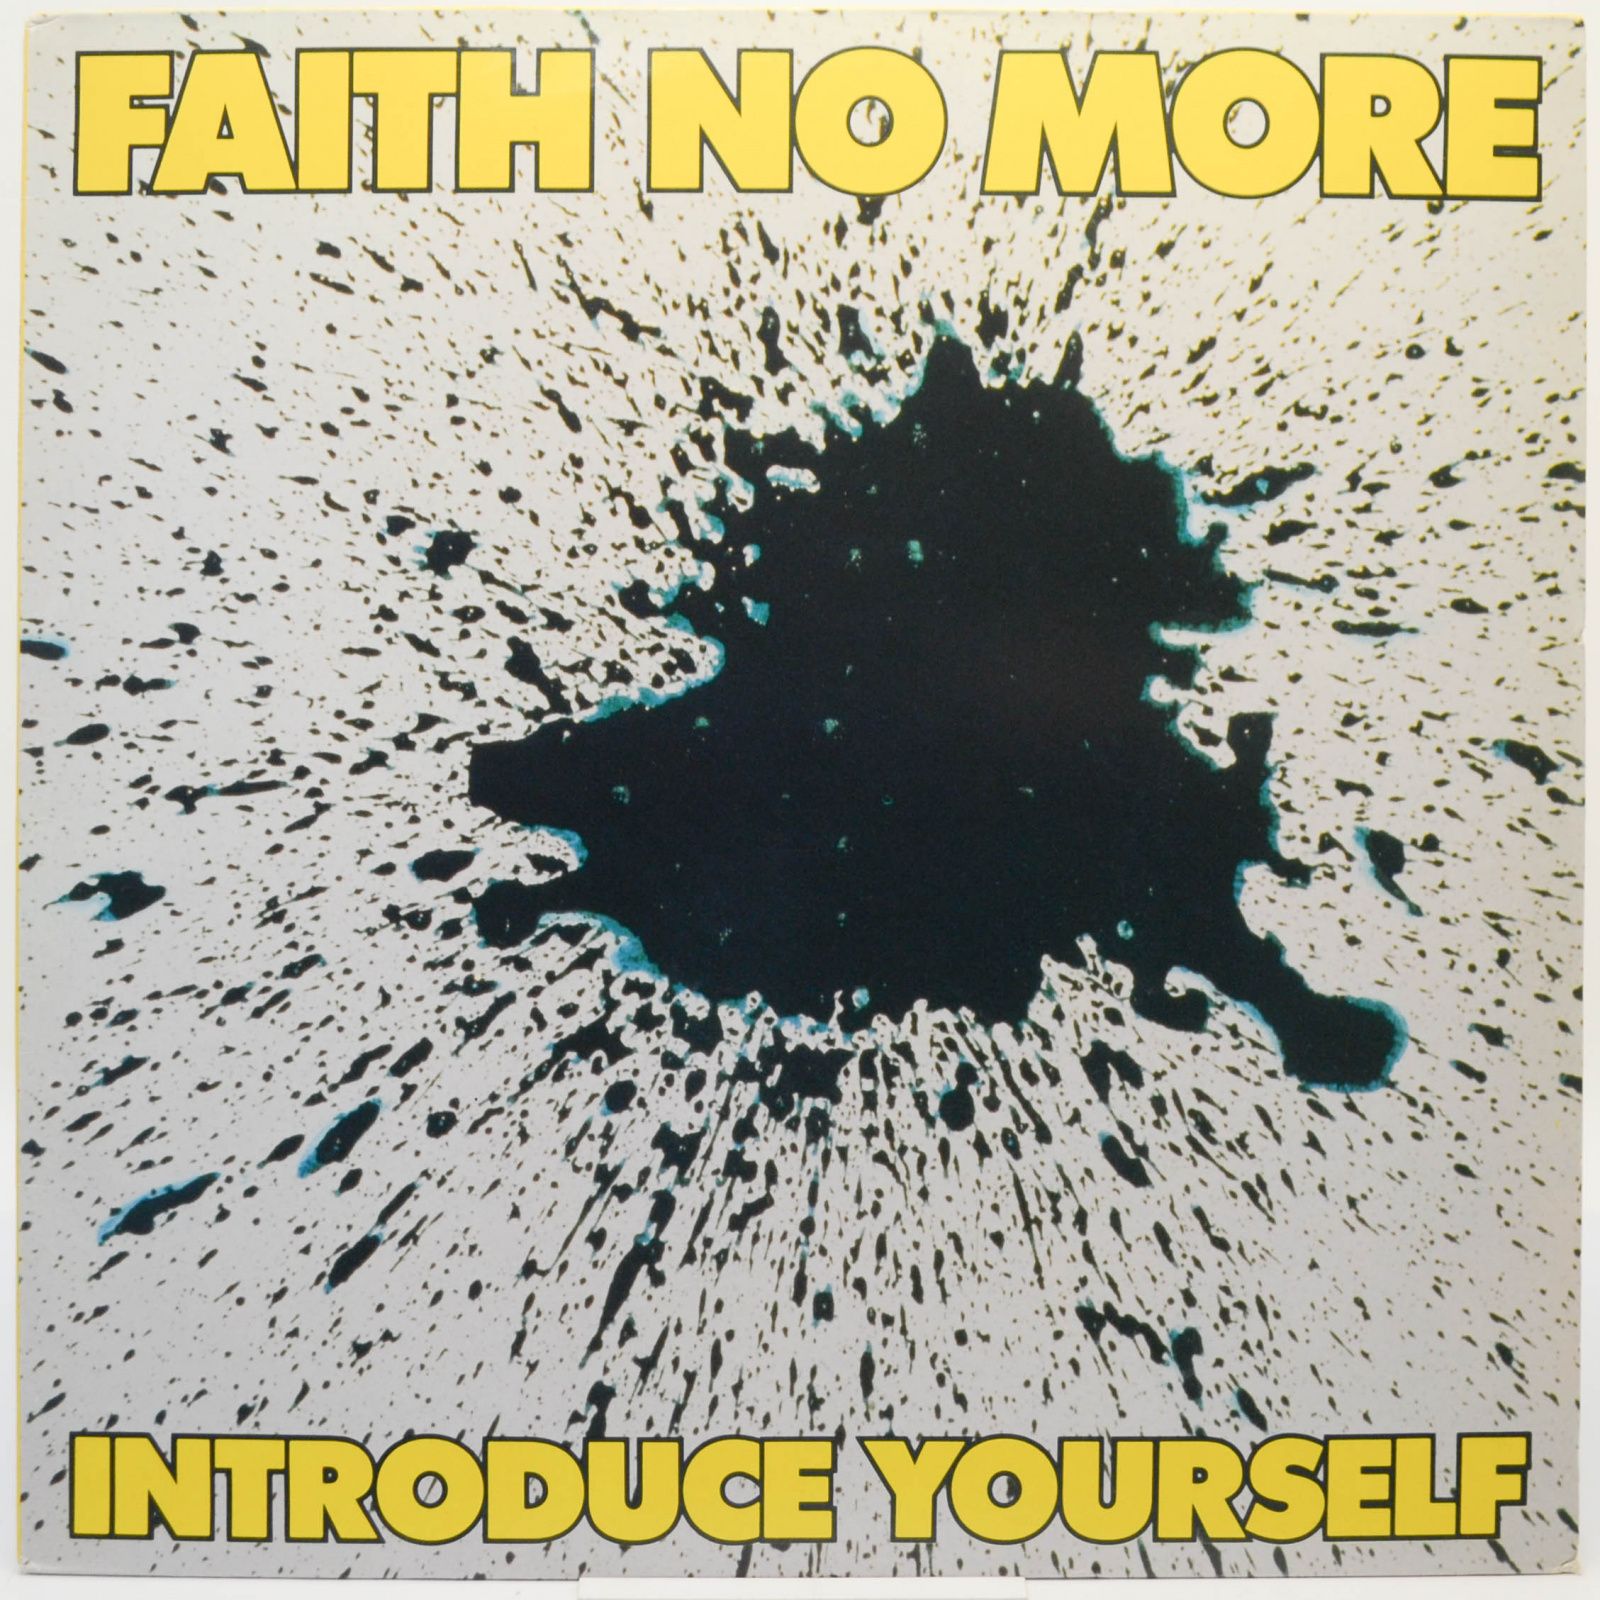 Introduce Yourself, 1987